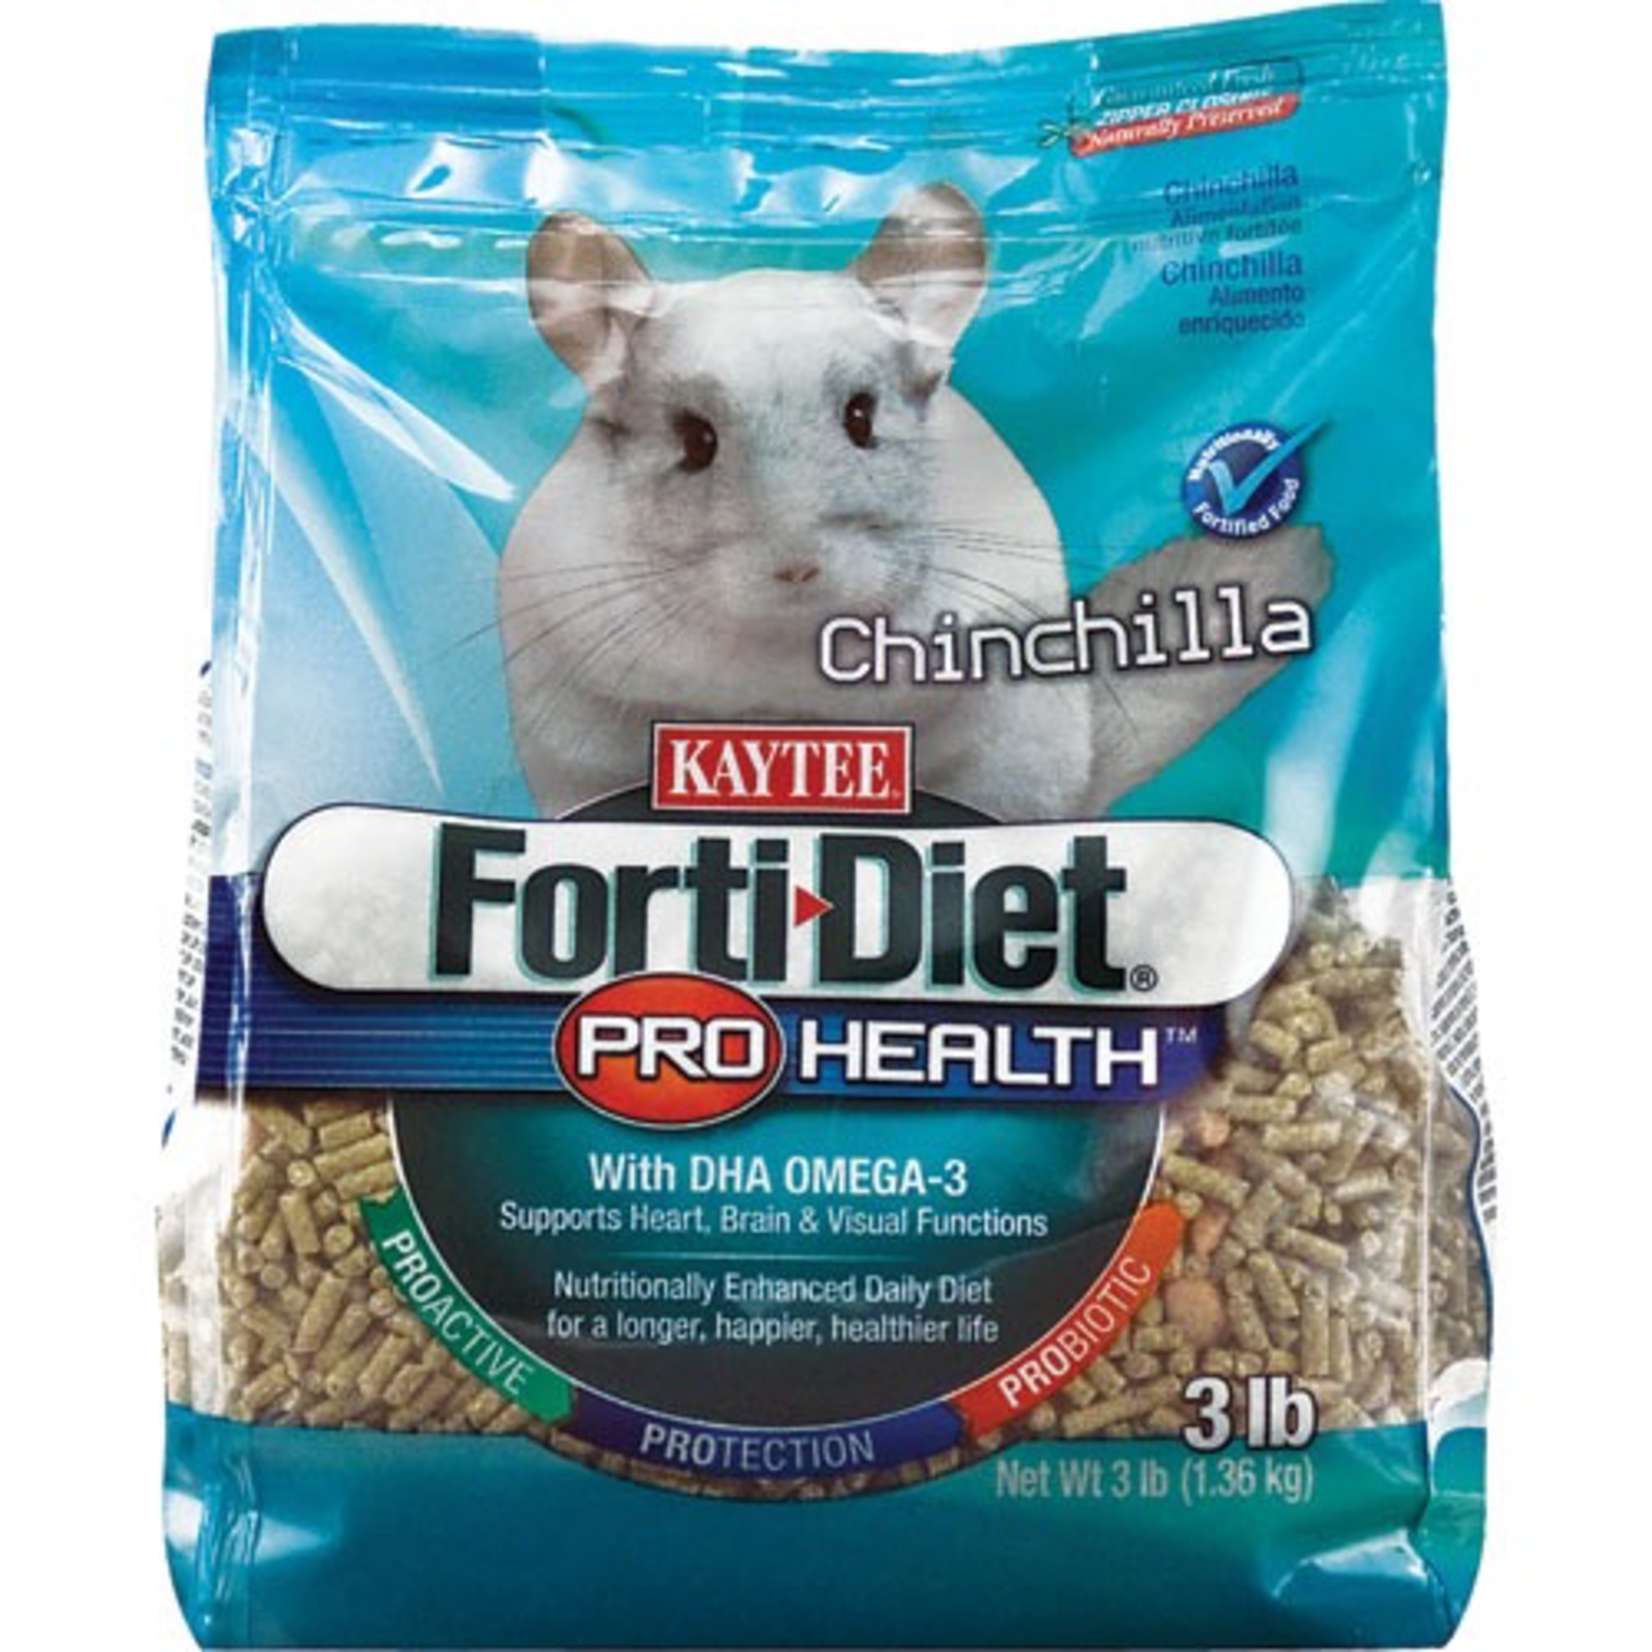 KAYTEE Kaytee Forti-Diet Pro Health Chinchilla Formula - 3 lb